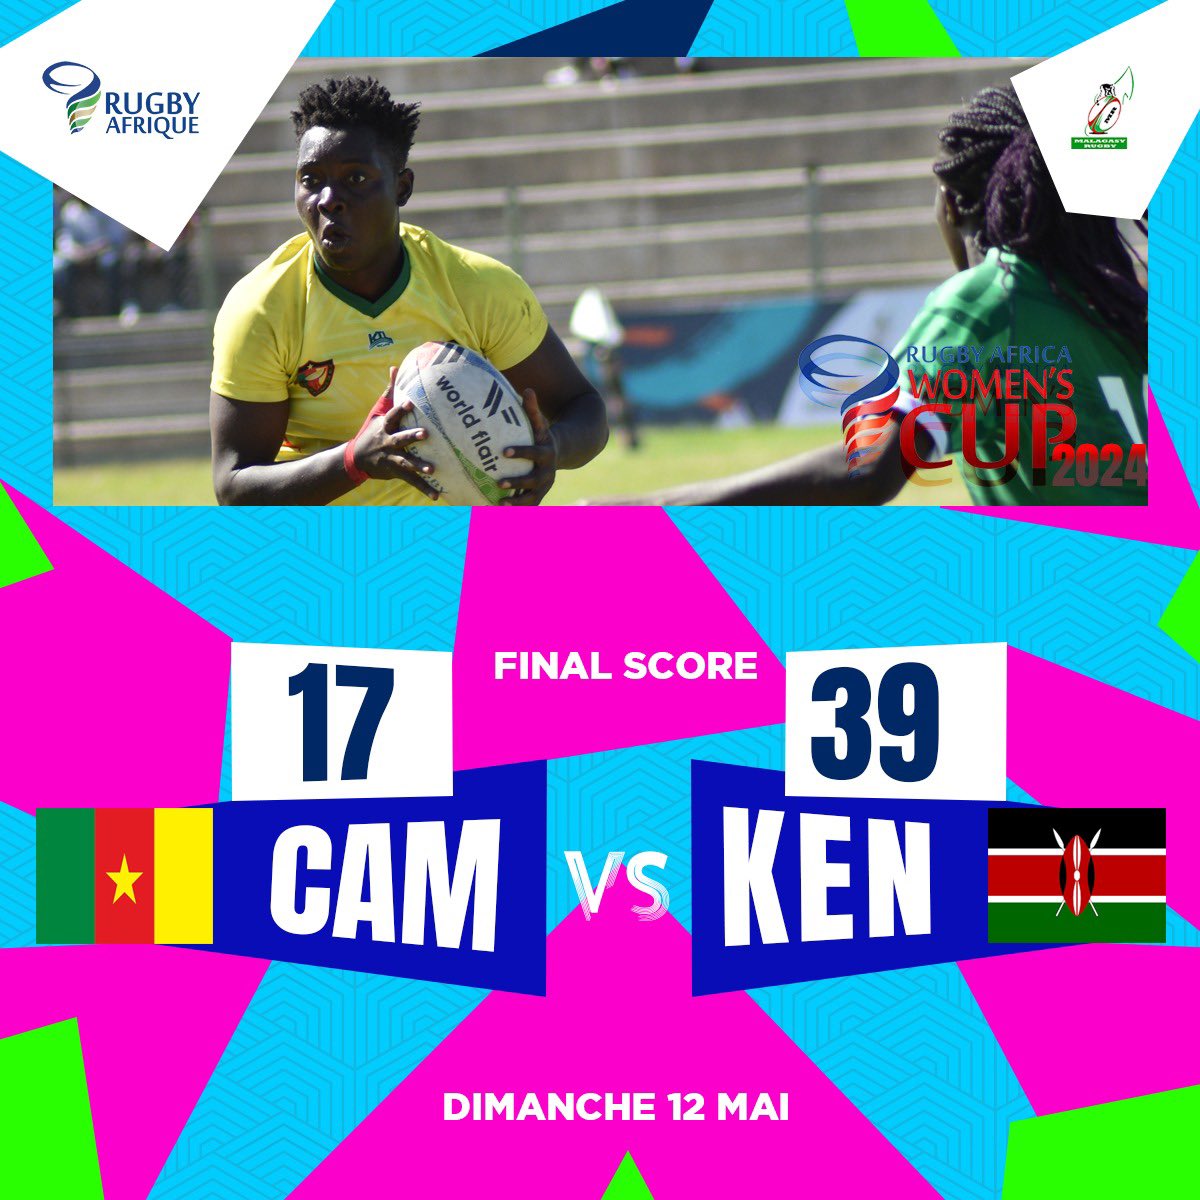 Rugby Africa Women’s Cup Match Day 3 Final score CAM VRS KENYA